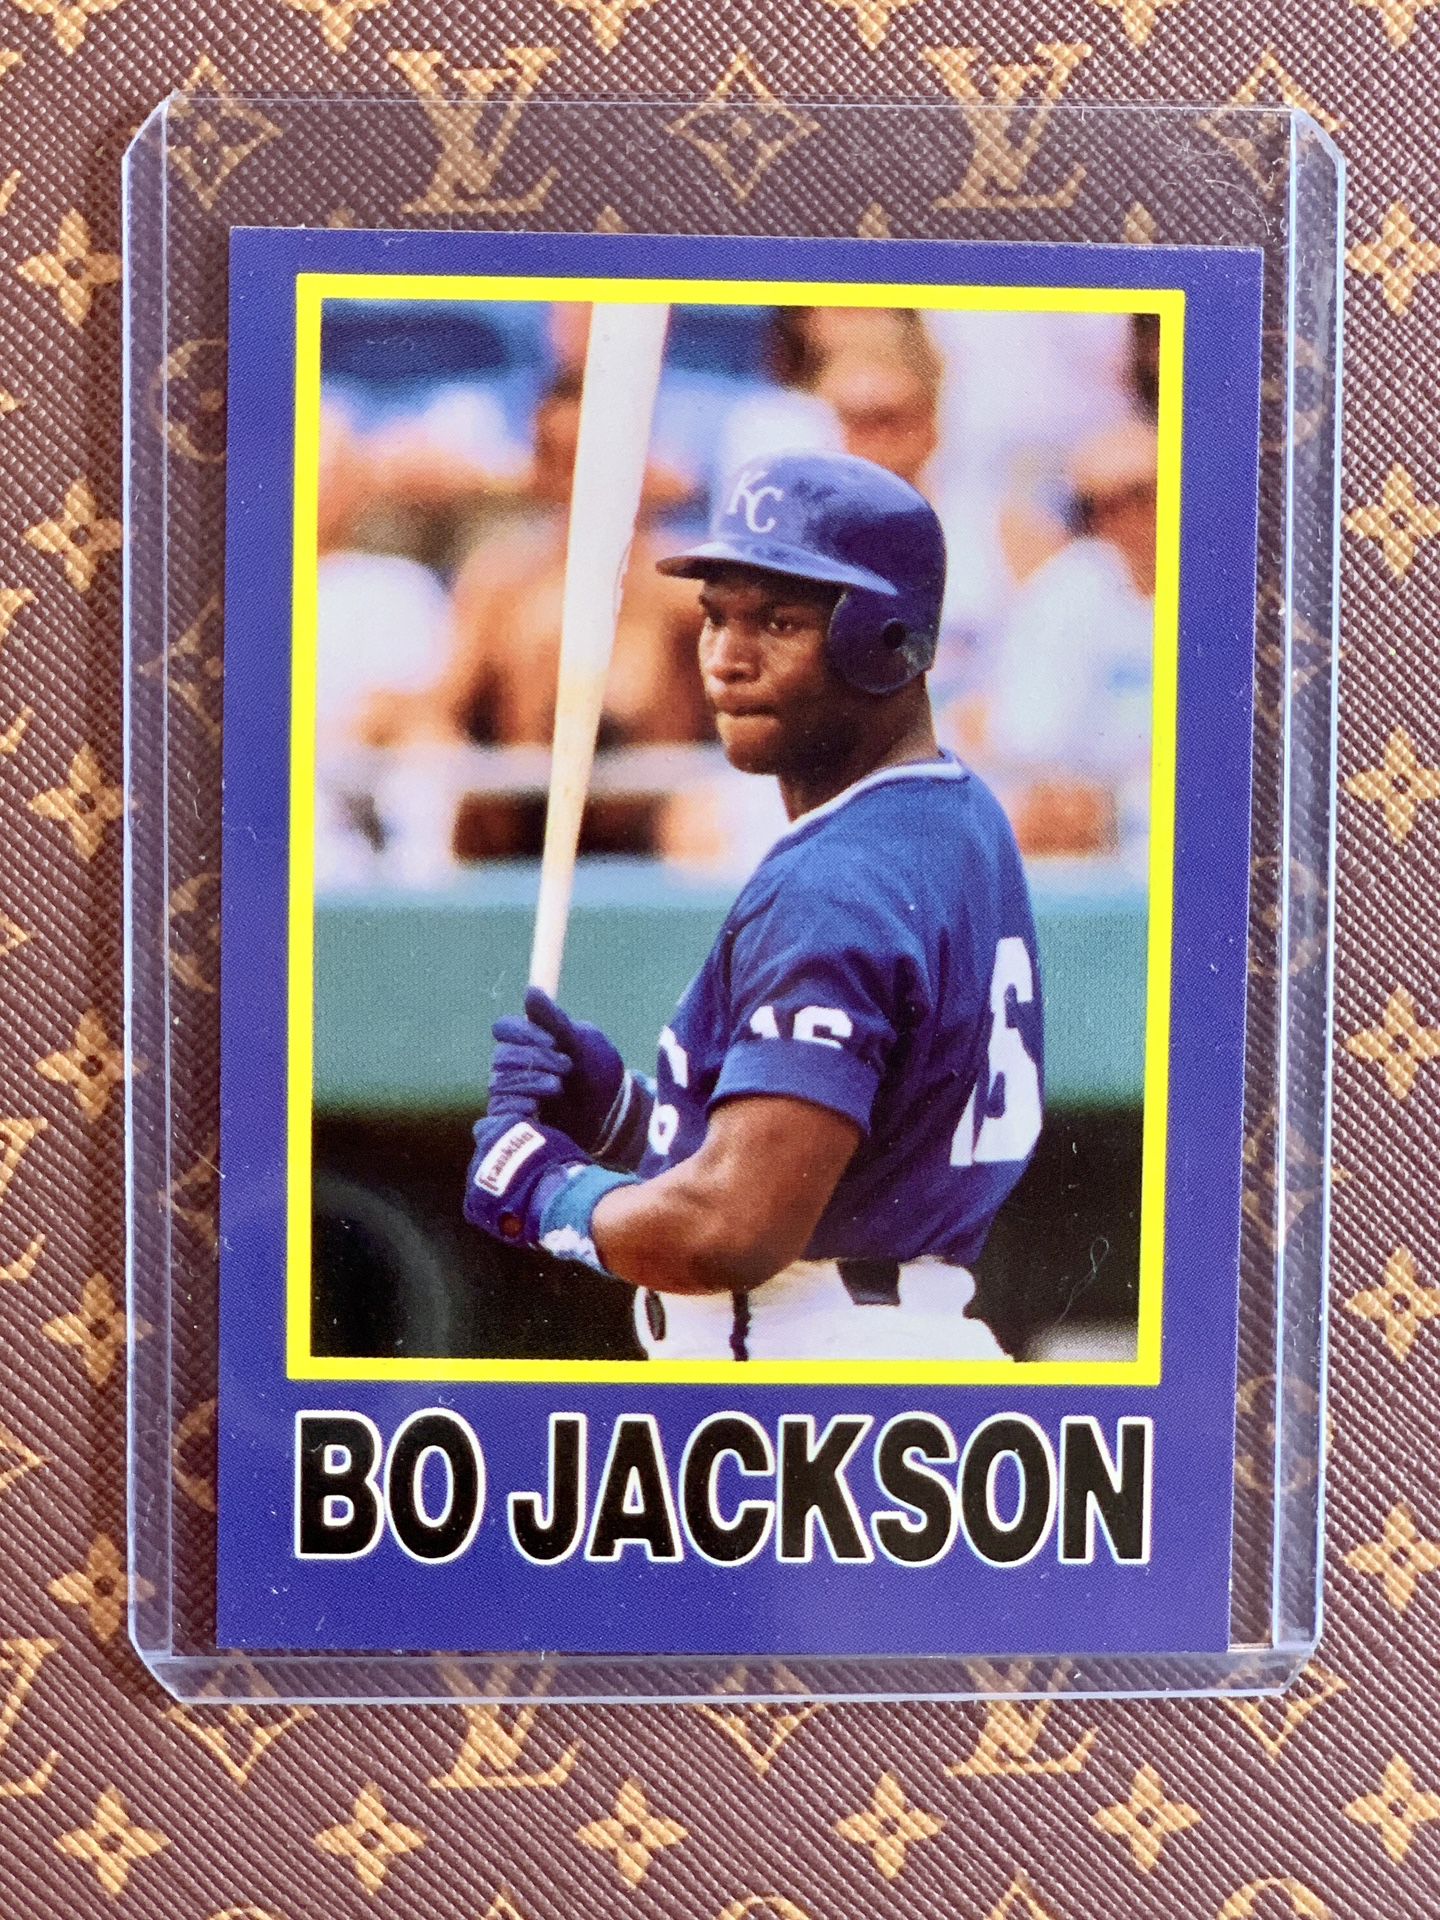 BO JACKSON BASEBALL CARD for Sale in Los Angeles, CA